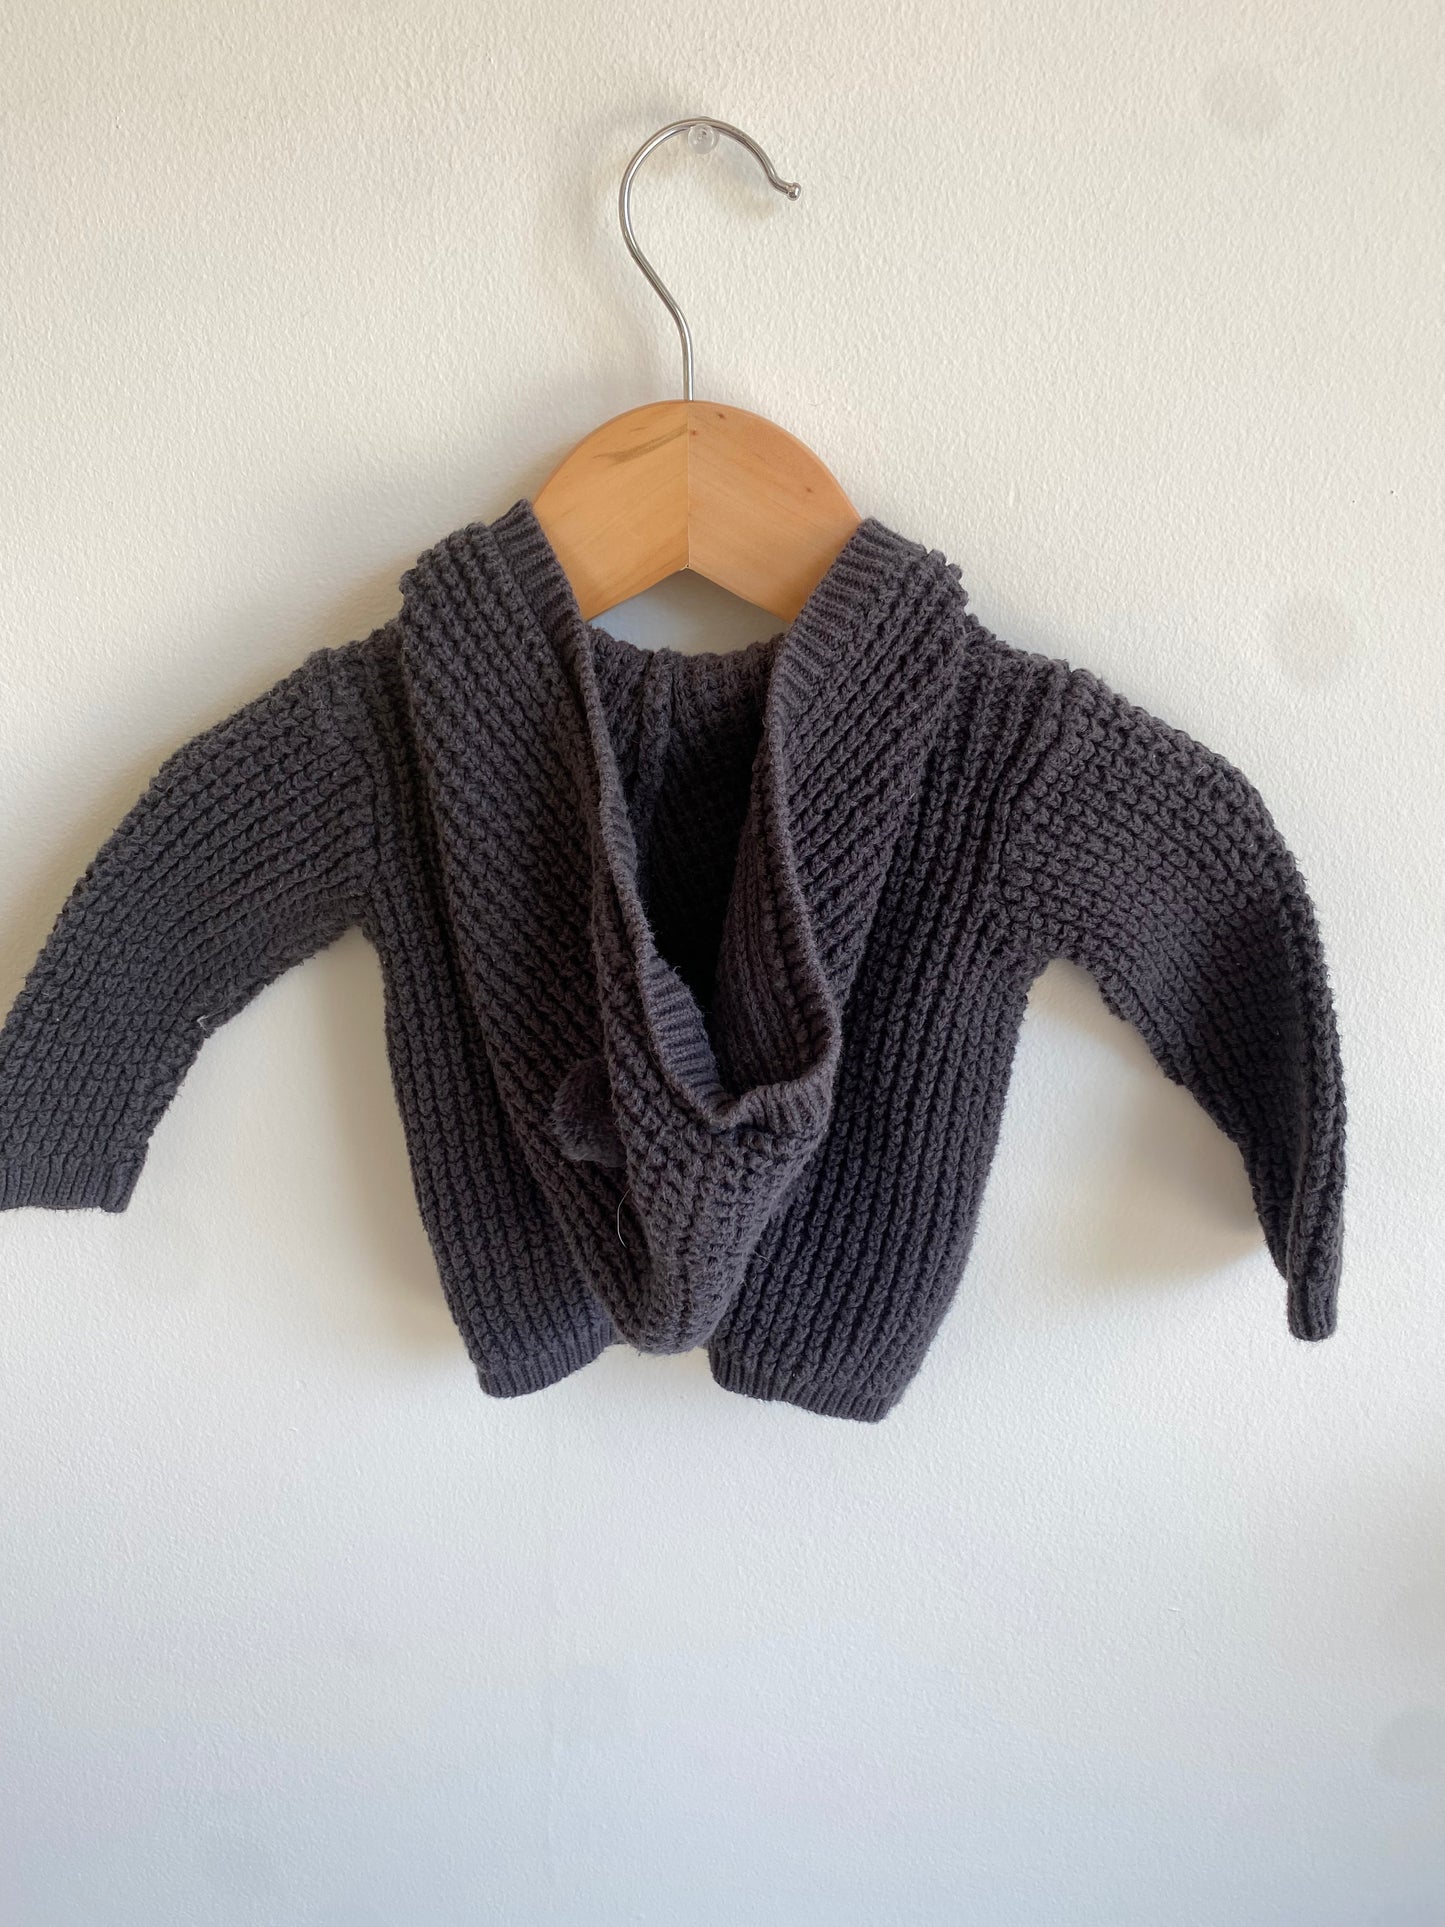 Hooded Dark Grey Sweater / 3m